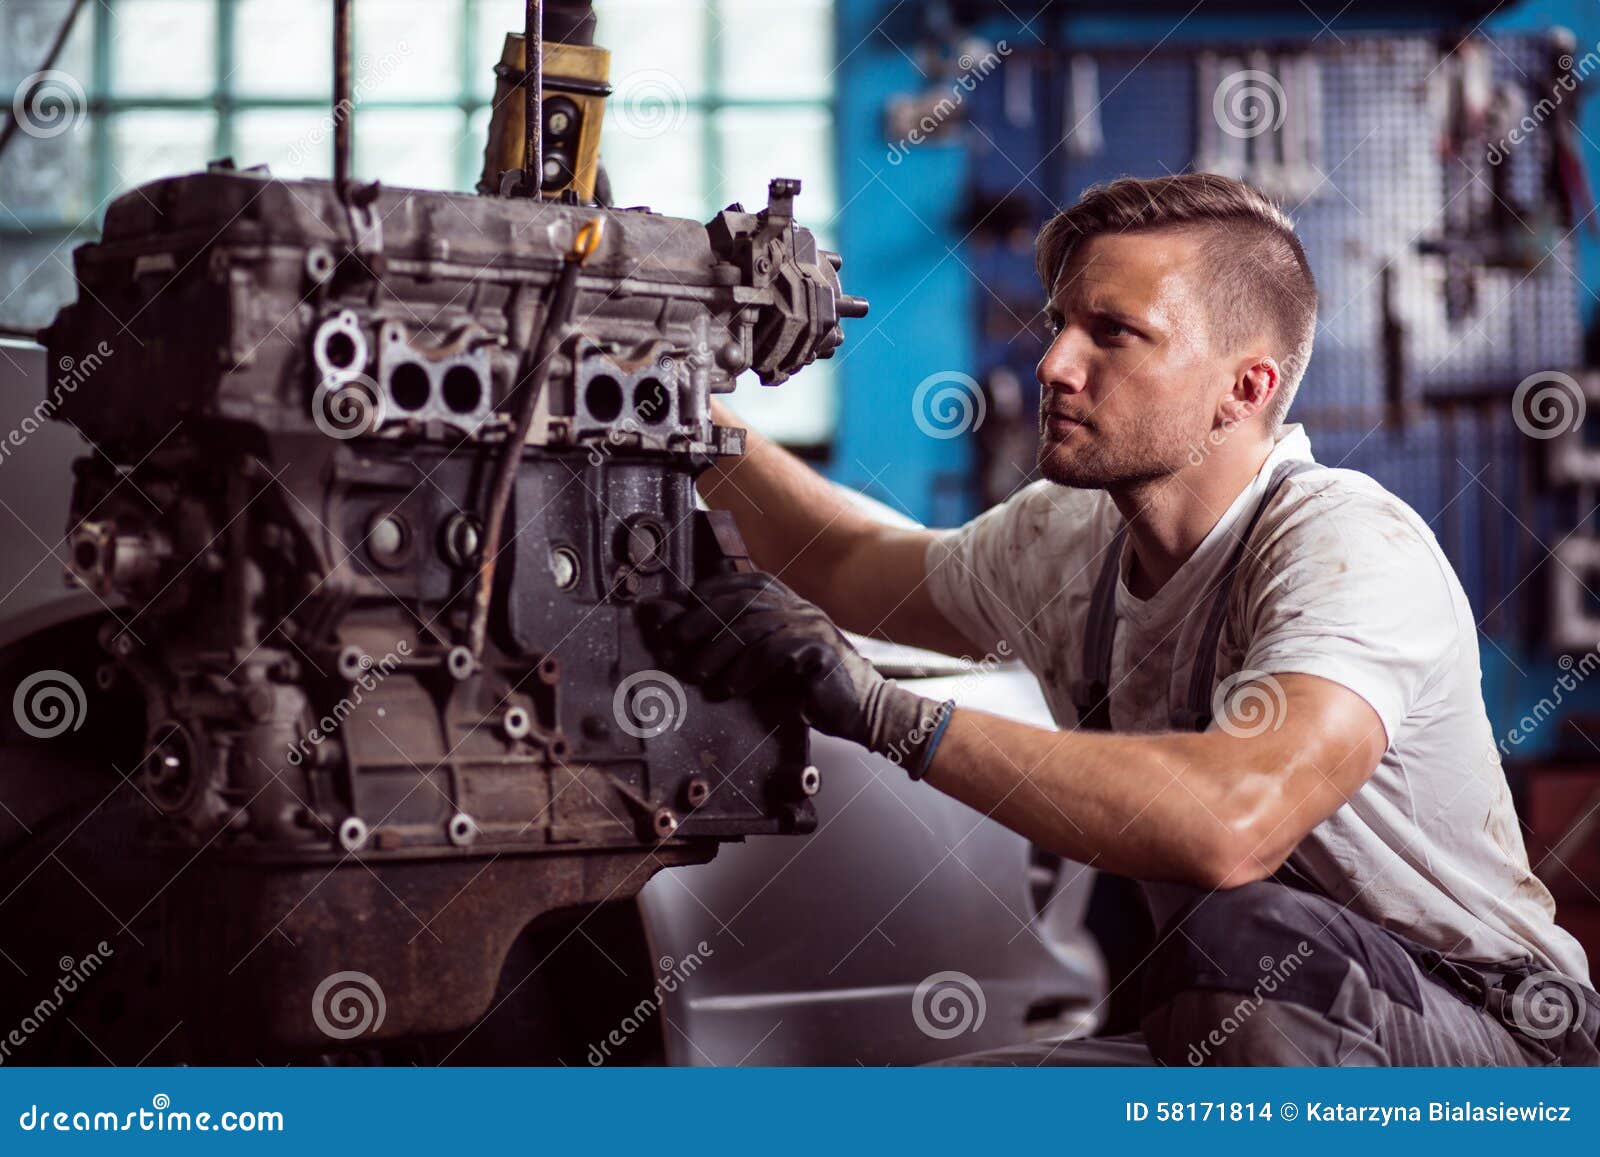 car technician maintaining automotive engine